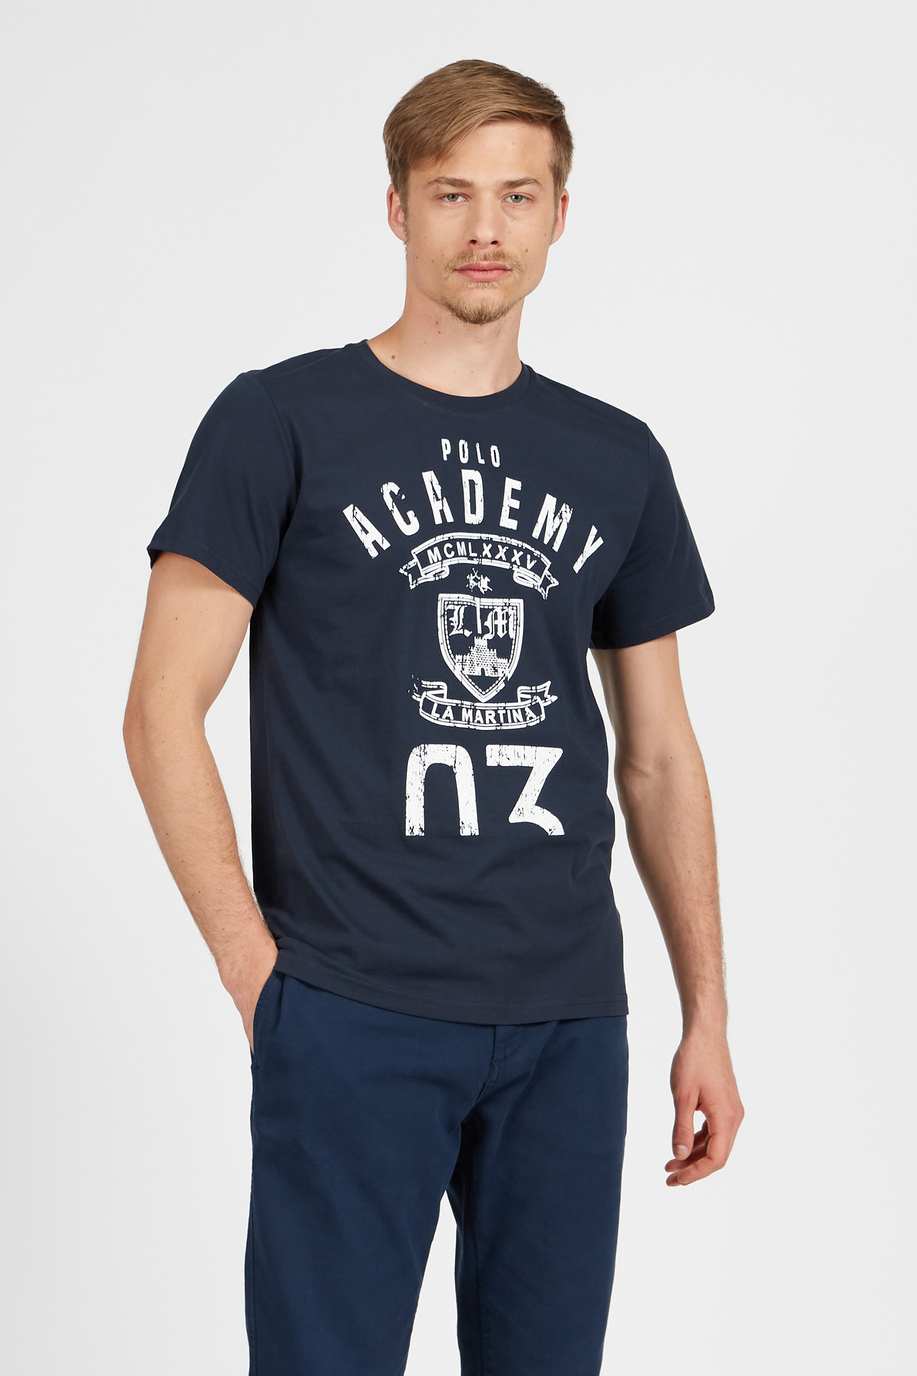 T-shirt da uomo a maniche corte modello girocollo regular fit - Polo Academy | La Martina - Official Online Shop